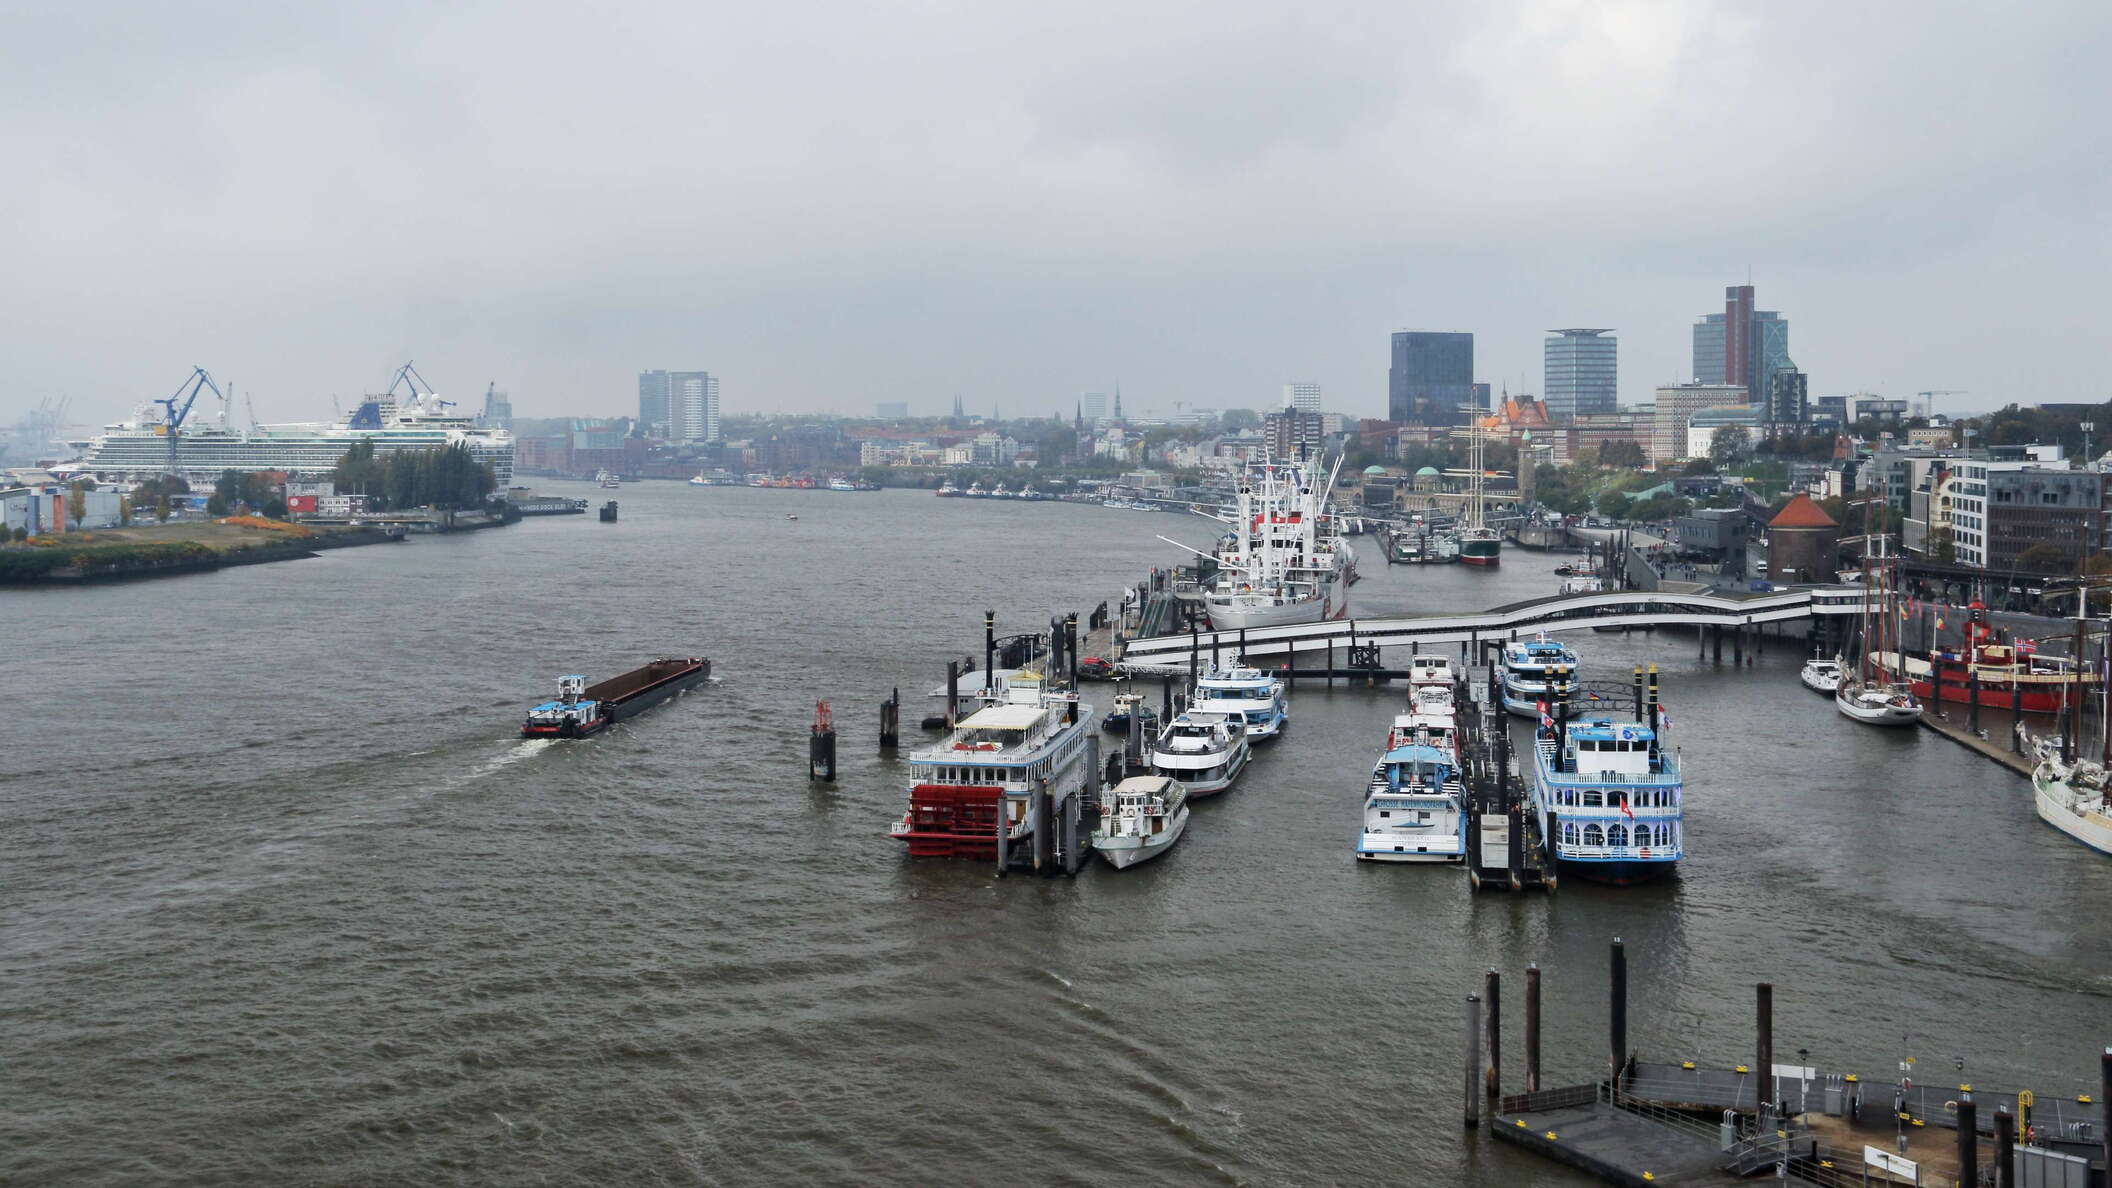 Hamburg with Elbe river